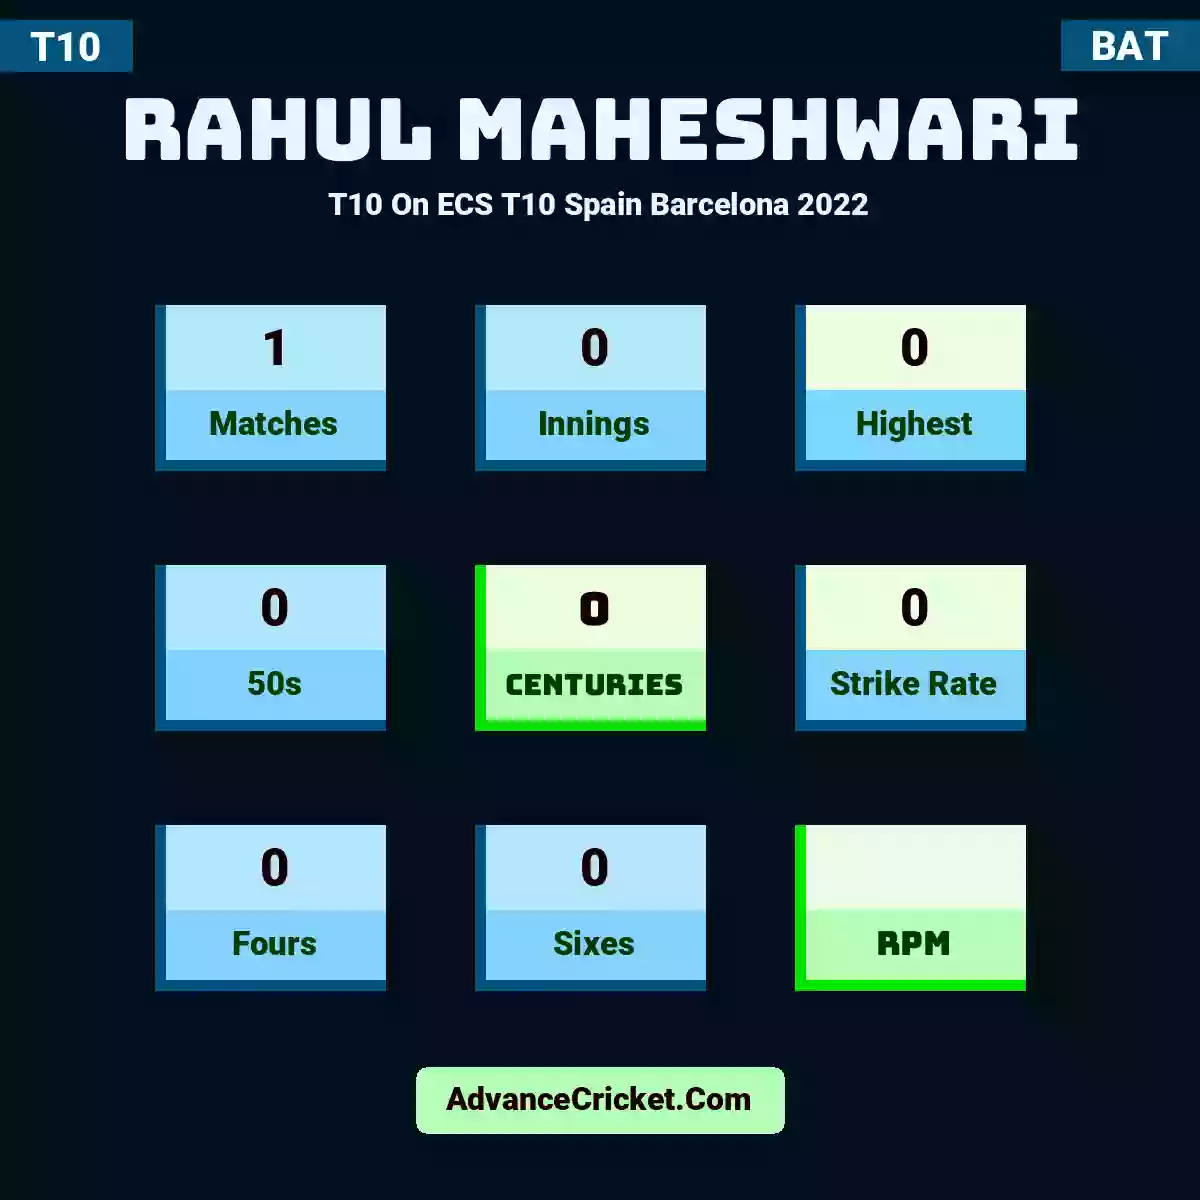 Rahul Maheshwari T10  On ECS T10 Spain Barcelona 2022, Rahul Maheshwari played 1 matches, scored 0 runs as highest, 0 half-centuries, and 0 centuries, with a strike rate of 0. R.Maheshwari hit 0 fours and 0 sixes.